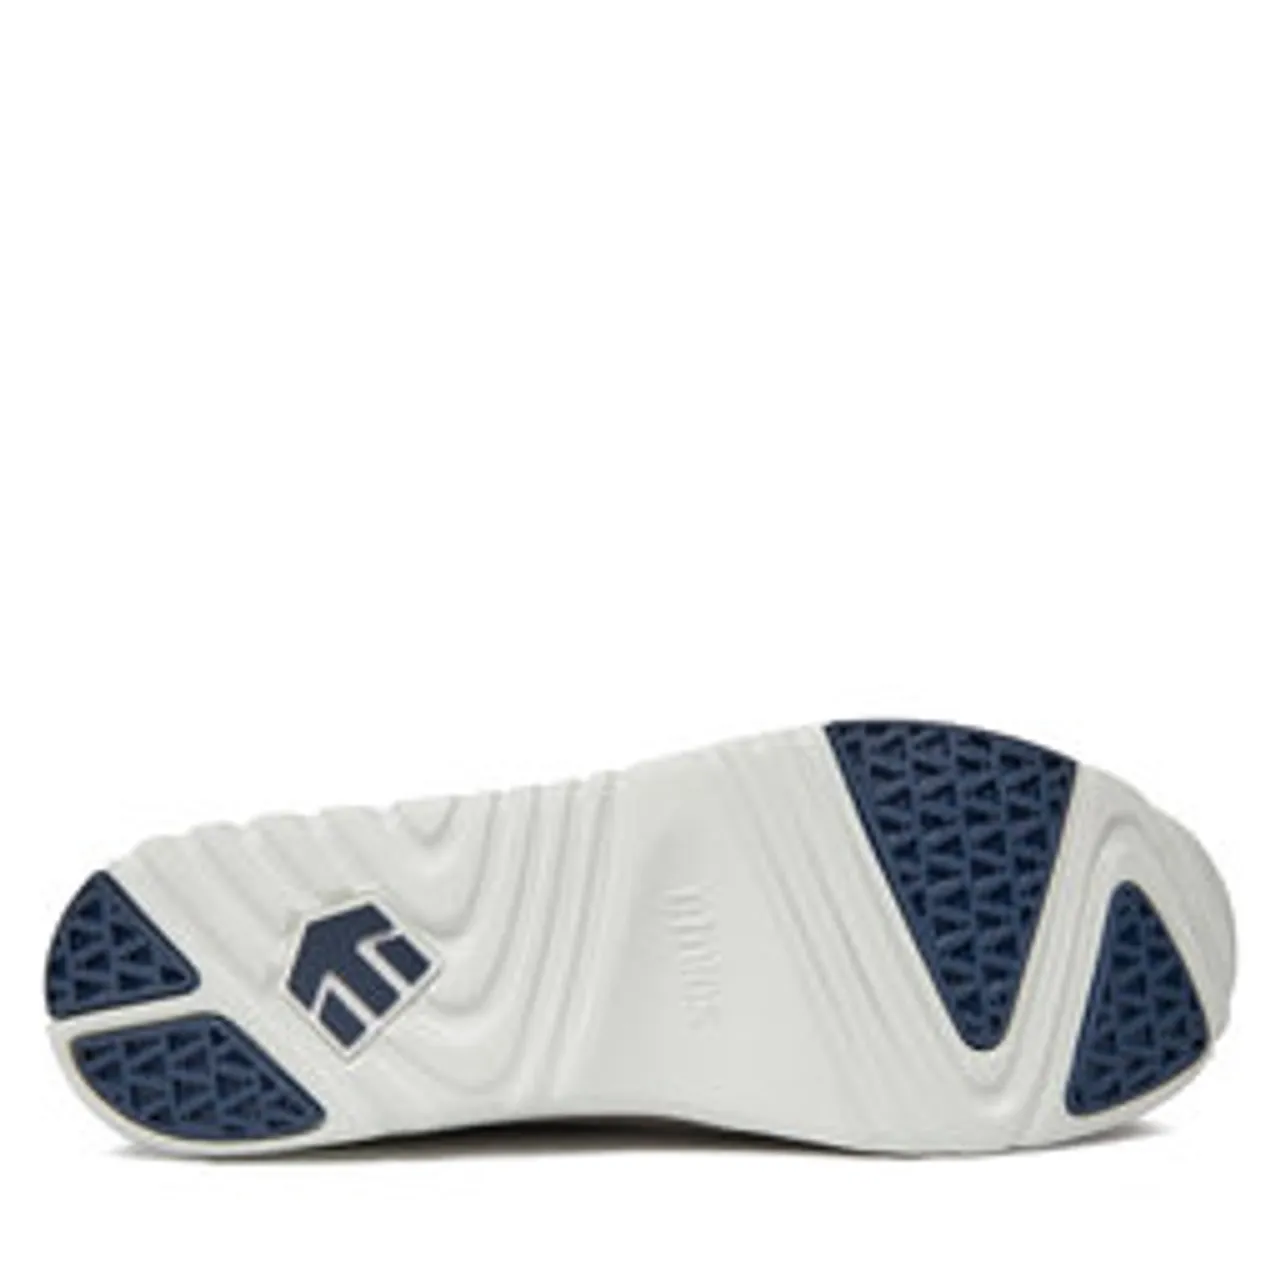 Sneakers Etnies Scout 4101000419 Tan/Blue/White 266